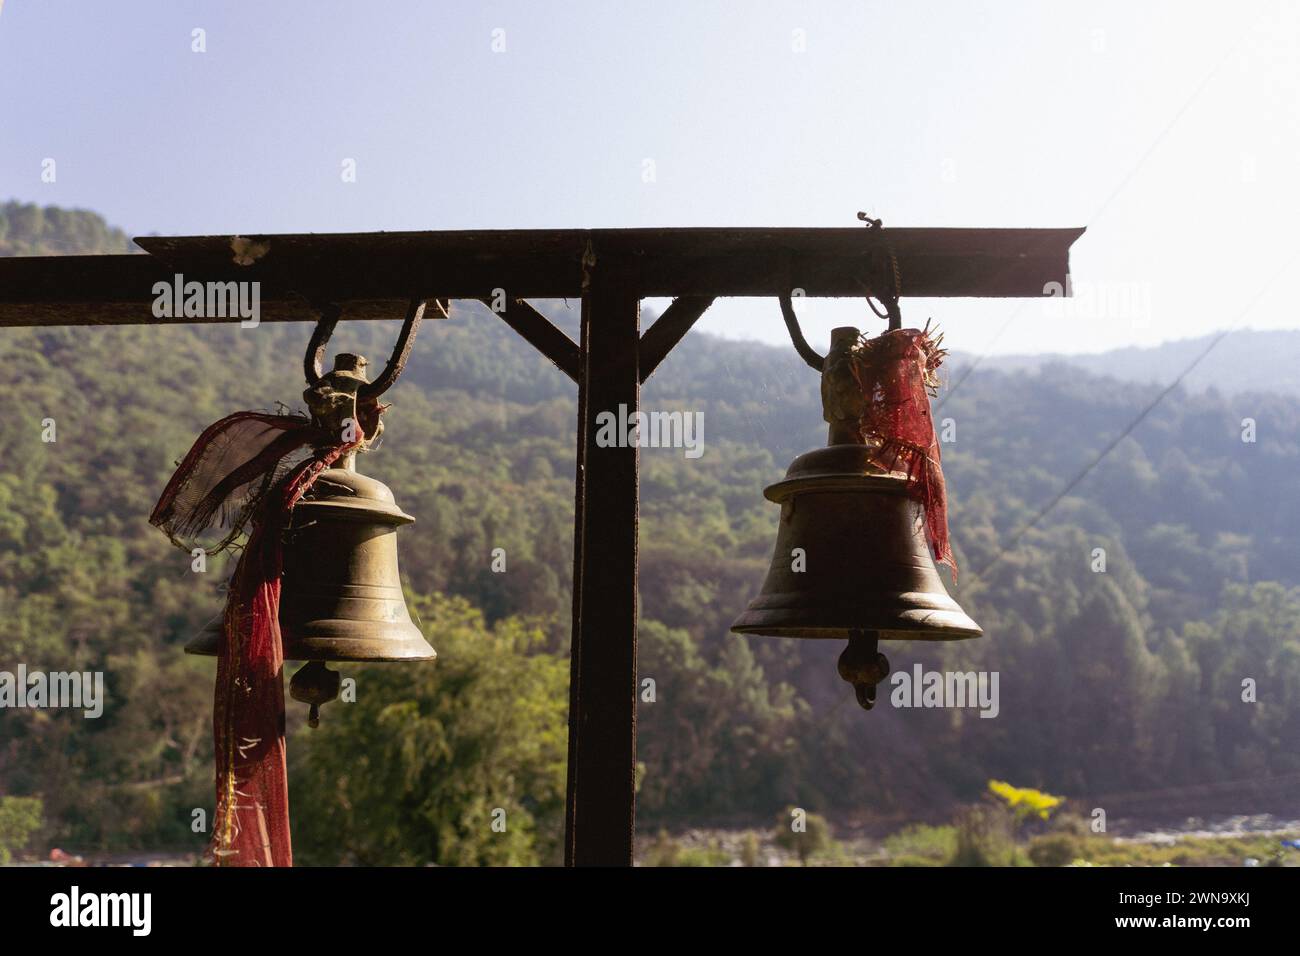 Campane di bronzo con panni rossi: Simbolismo spirituale al tempio Tarkeshwar Mahadev, Uttarakhand, India Foto Stock